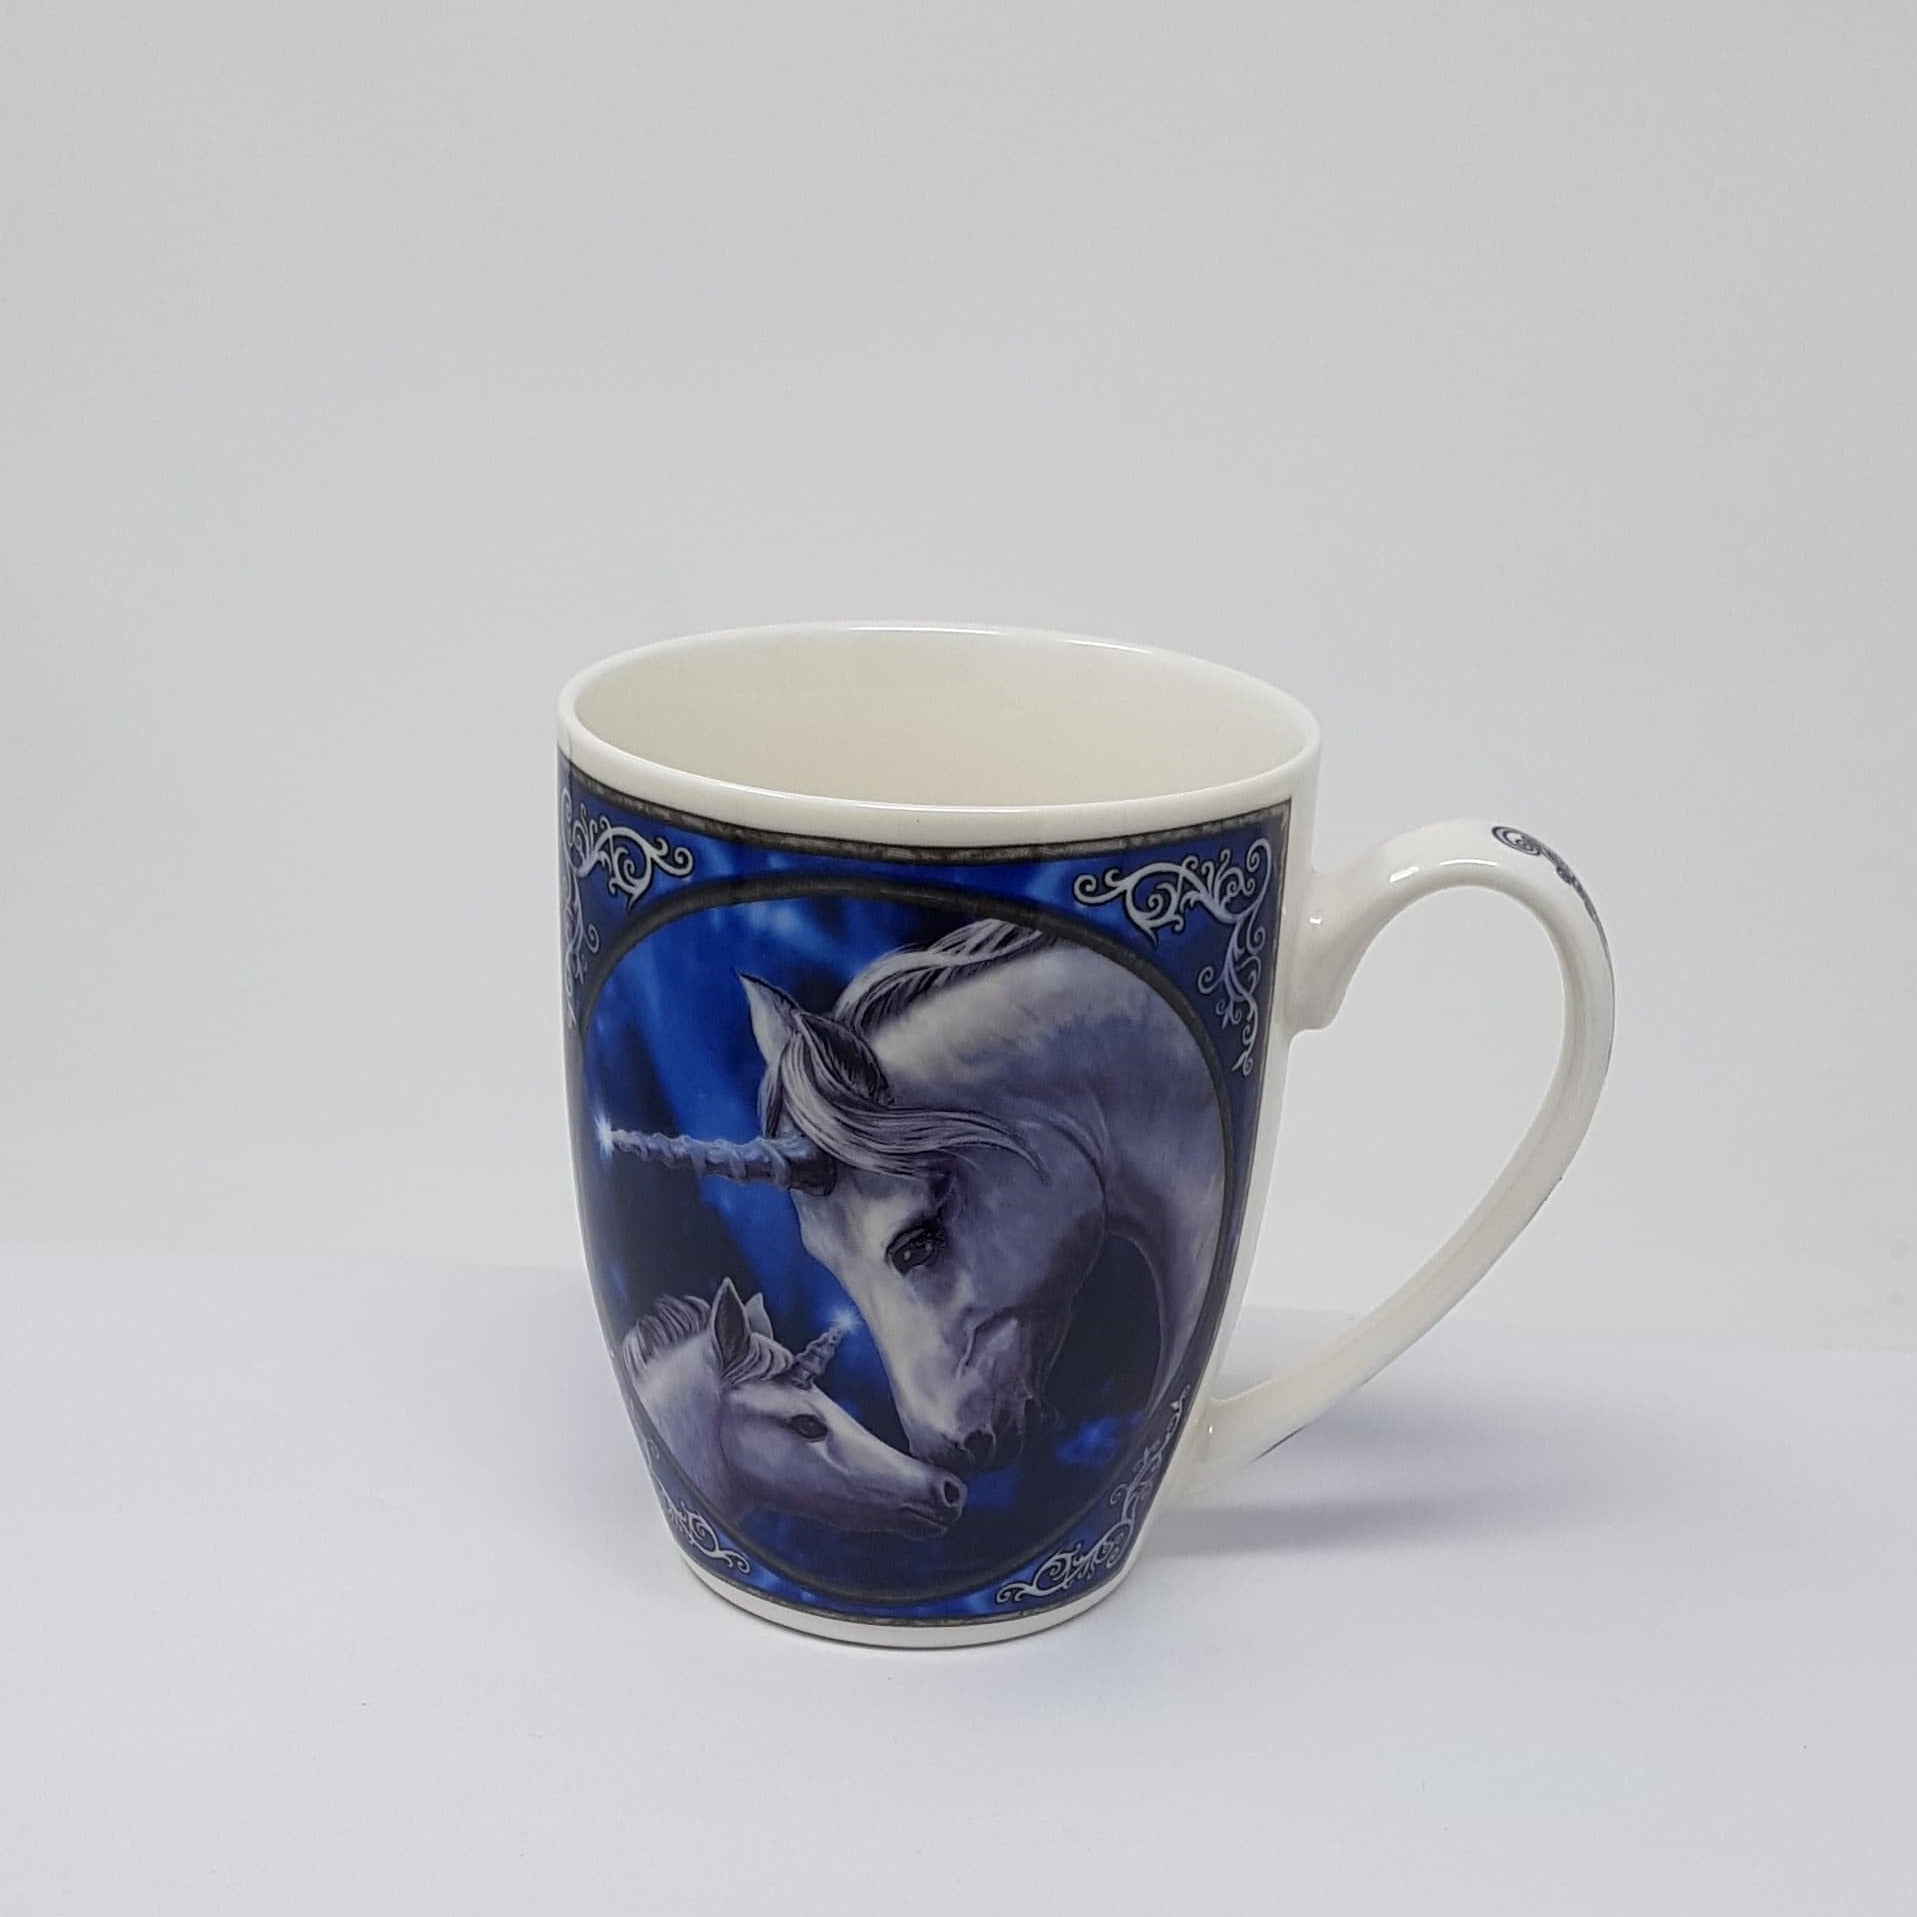 General Gift - Mug / Two Unicorns 'The Sacred Love'